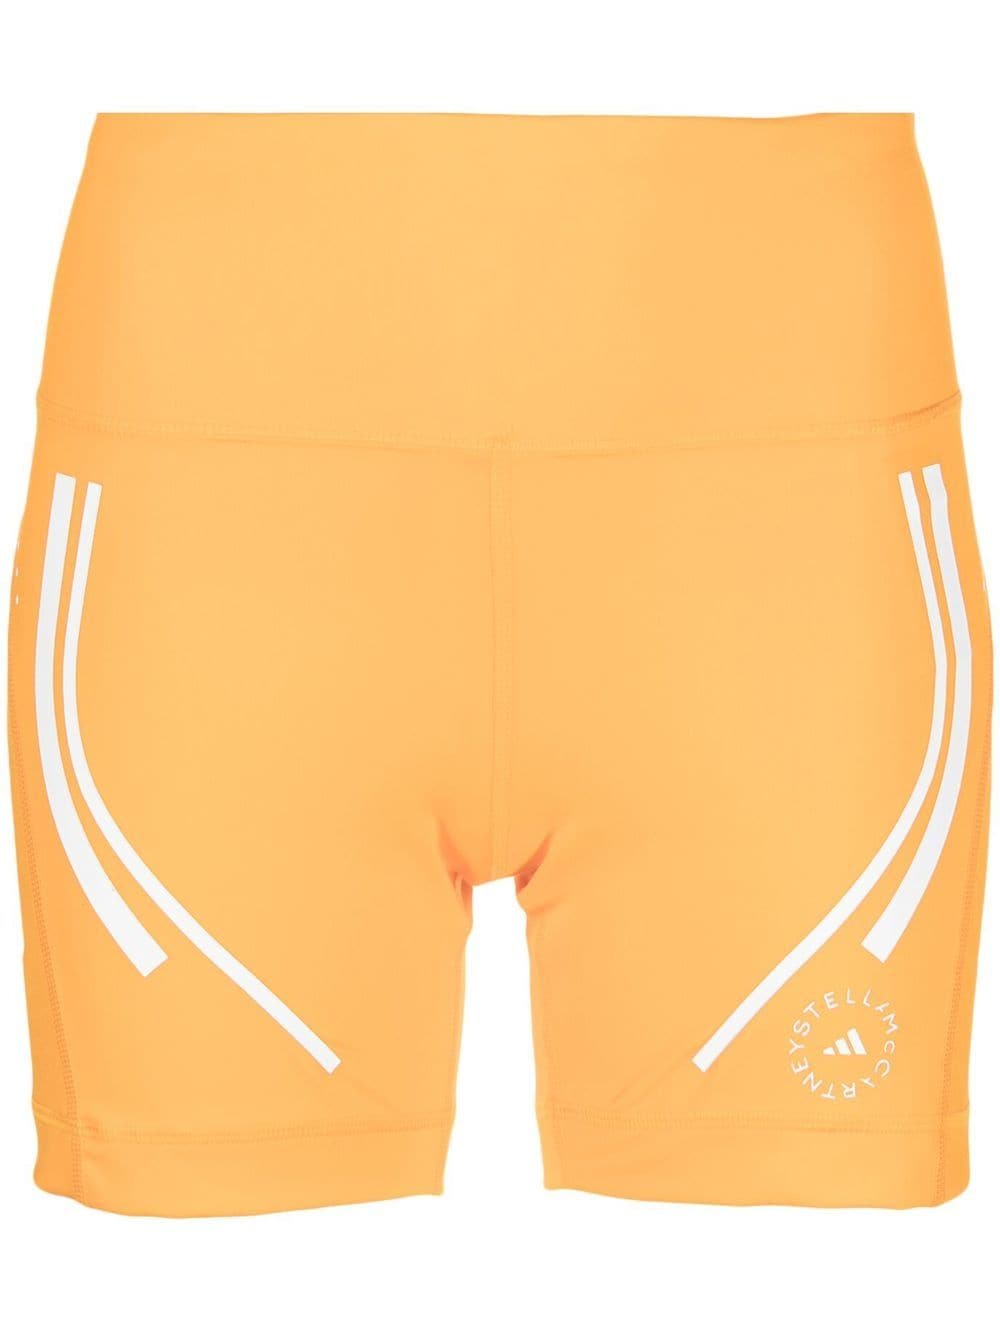 adidas by Stella McCartney high waist shorts - Orange